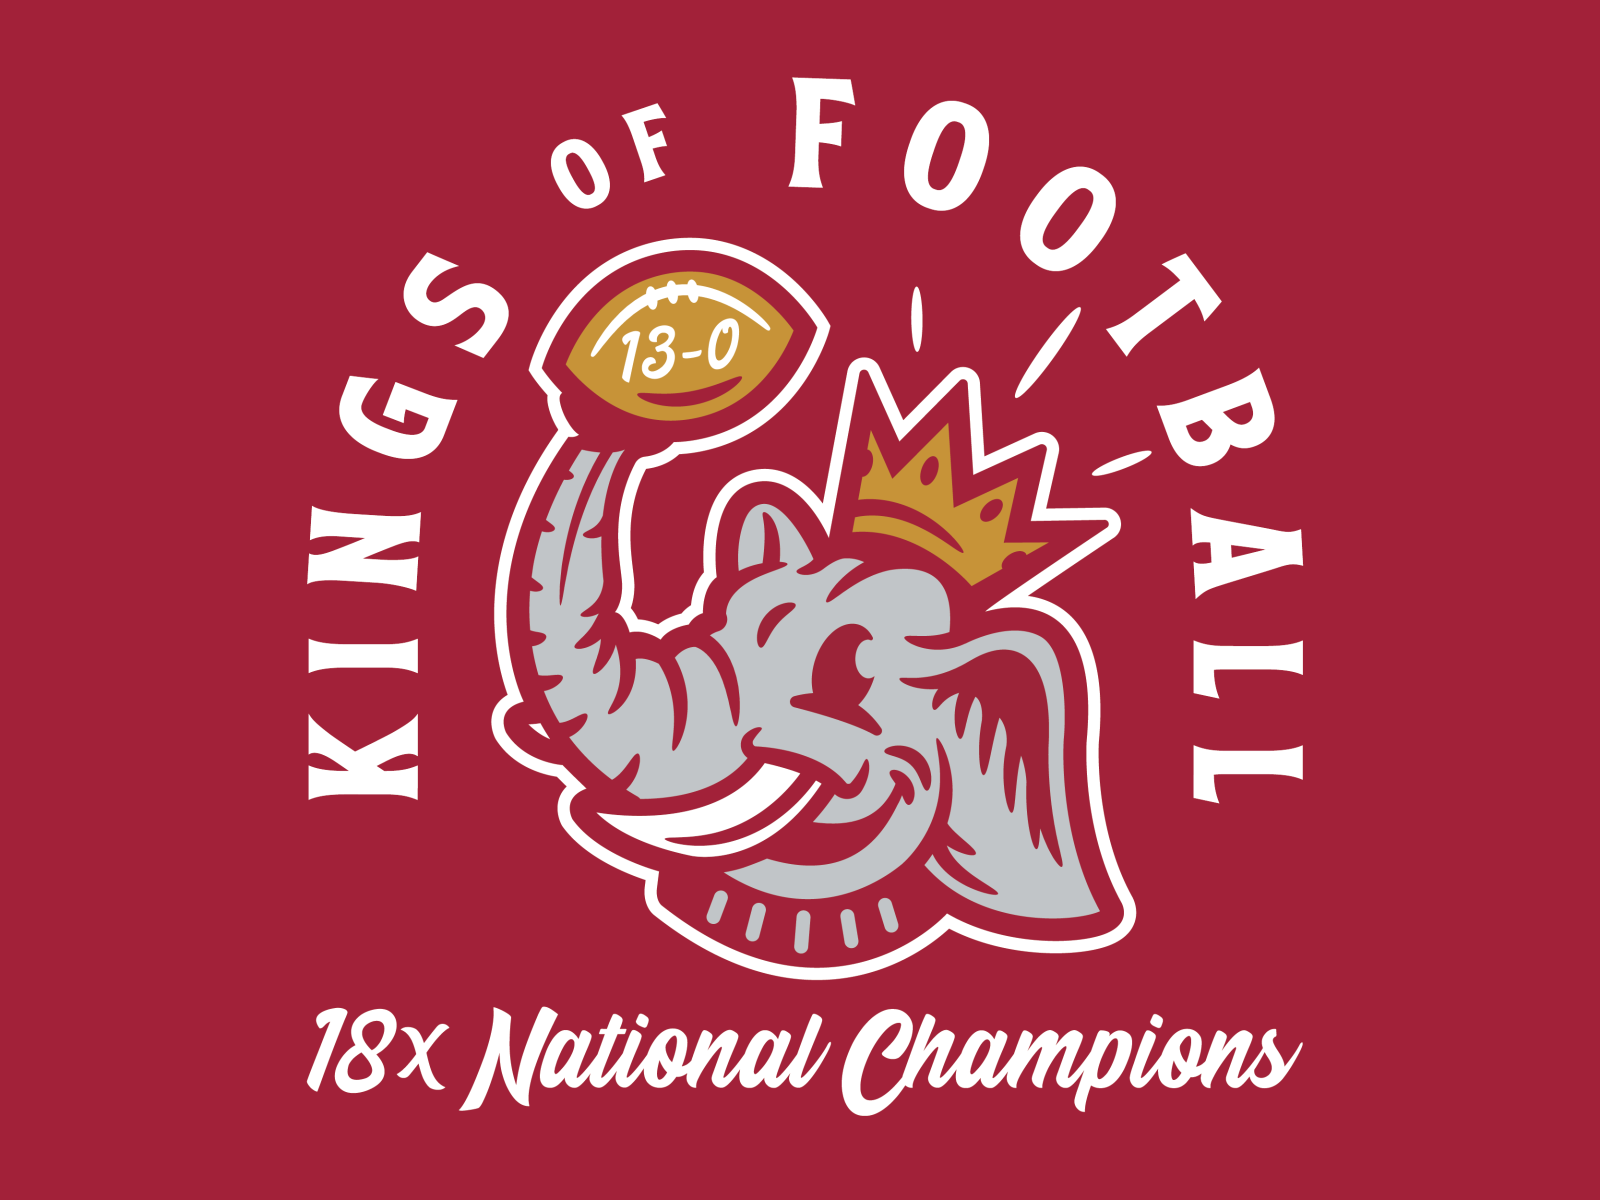 Kings of Football - Fanatics college champions undefeated handdrawn vintage illustration design sports football king crown elephant alabama